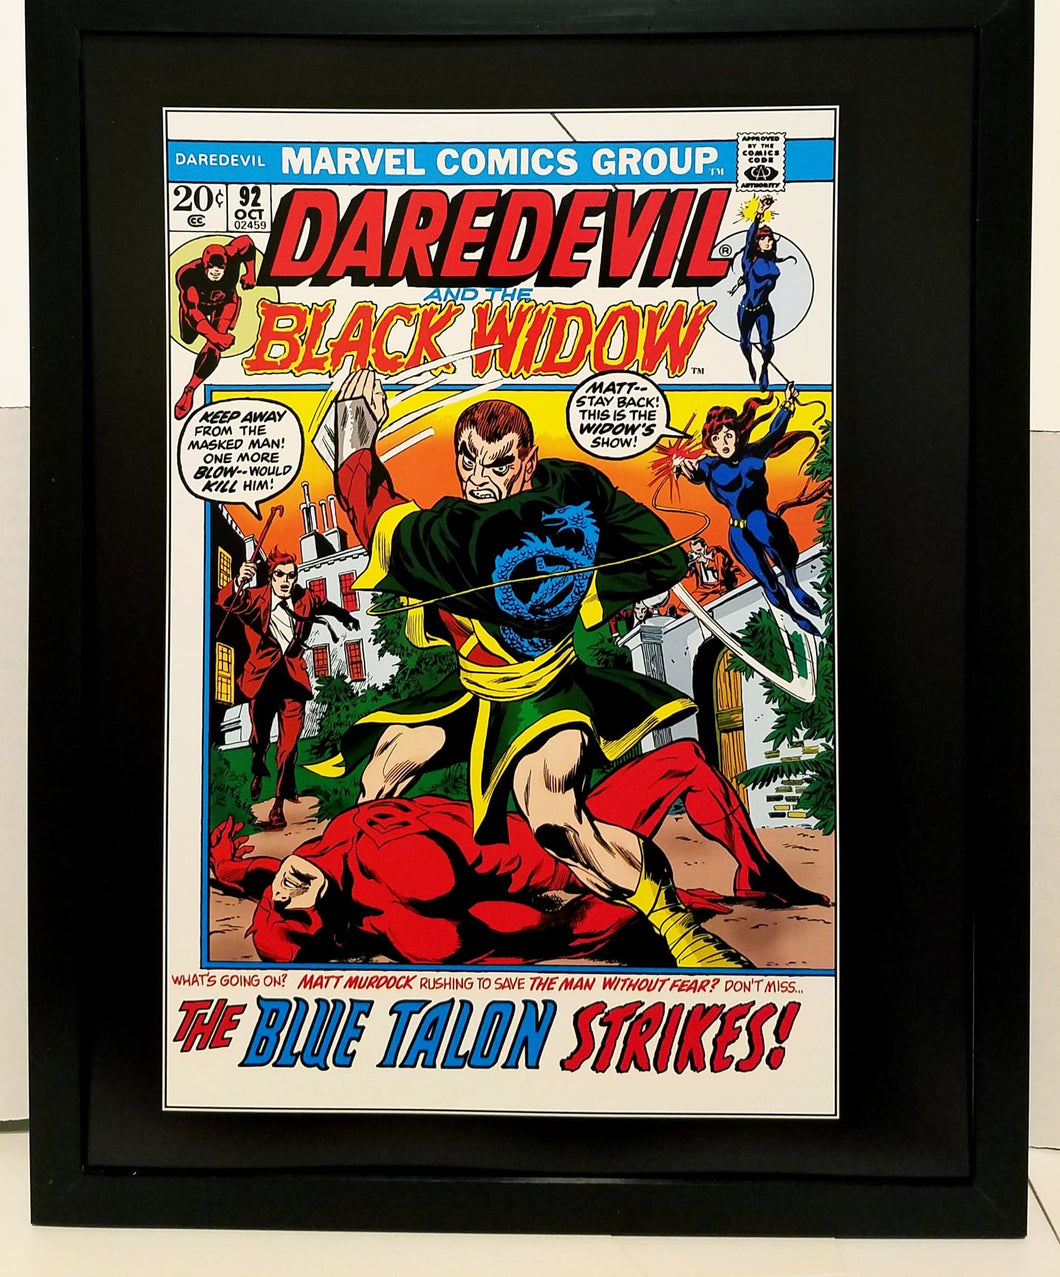 Daredevil #92 Black Widow by Gene Colan 11x14 FRAMED Marvel Comics Art Print Poster